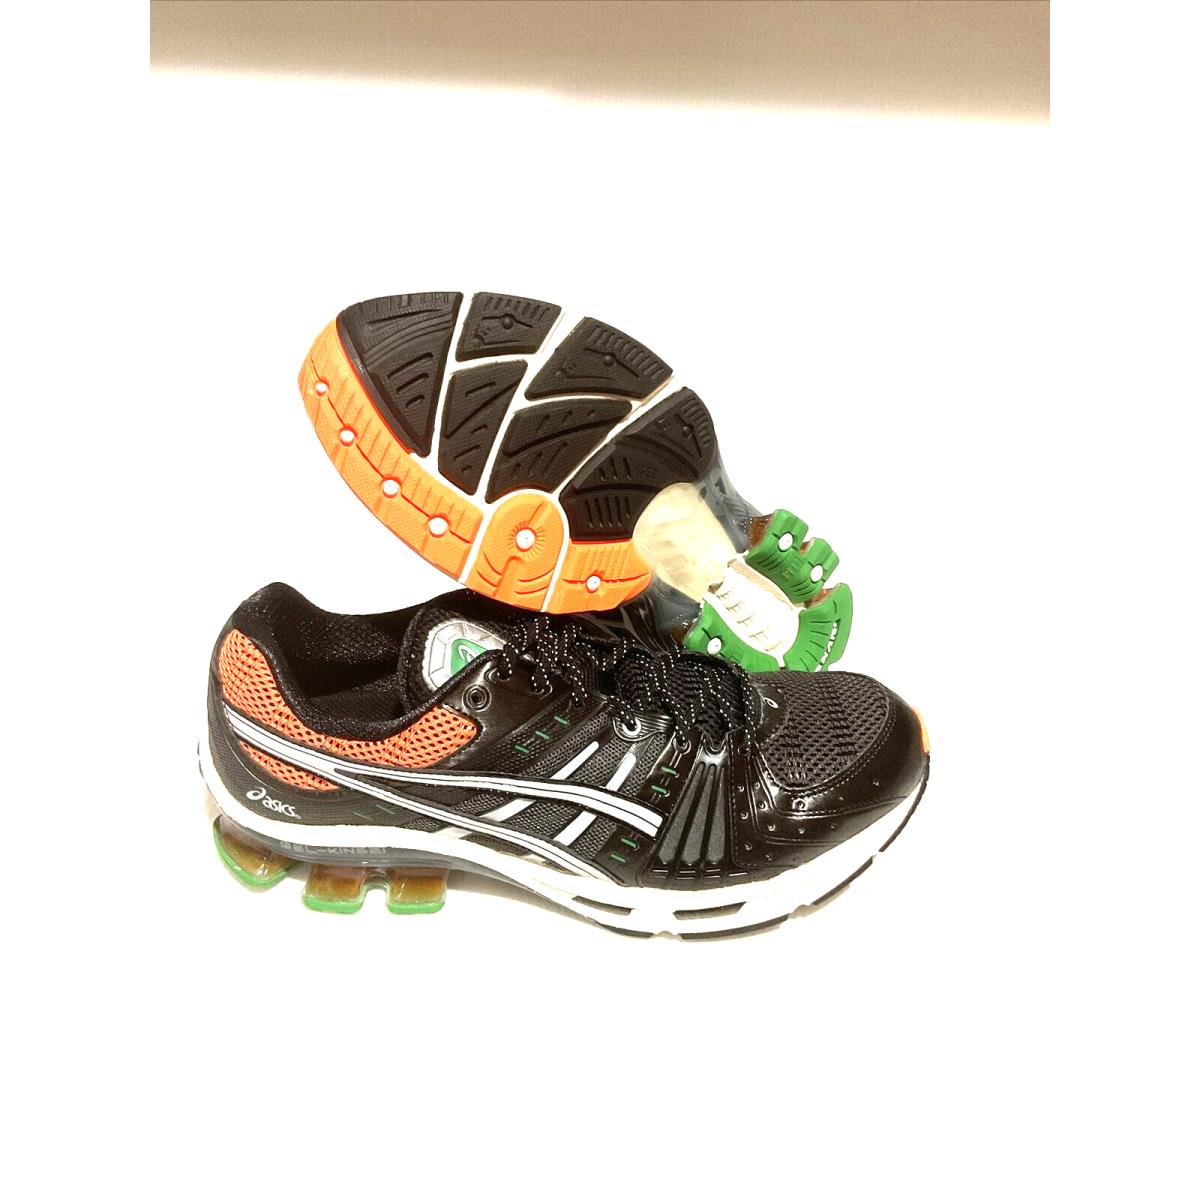 Asics Gel-kinsei OG Graphite Piedmont Gray Running Shoes Size 10 US